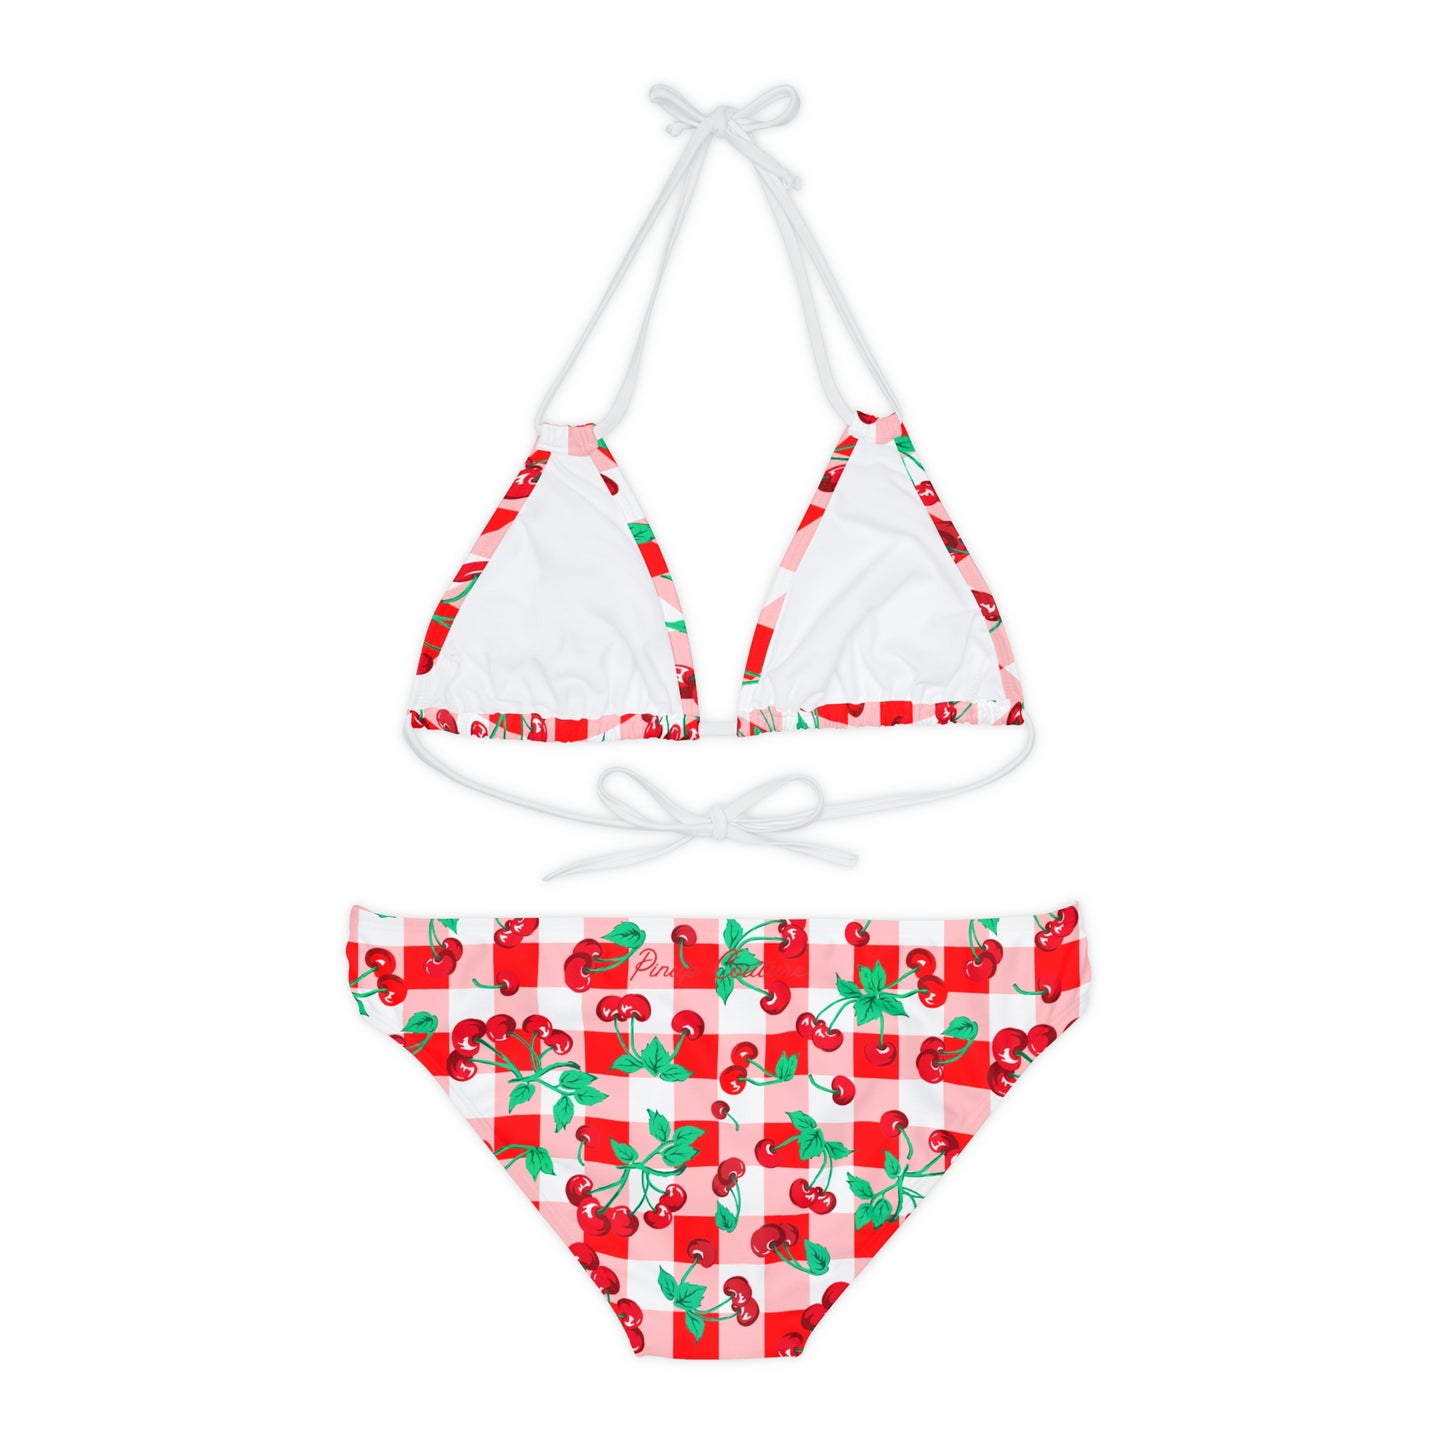 Alex Red Gingham Vintage Cherry Print Strappy Bikini Set | Pinup Couture Swim